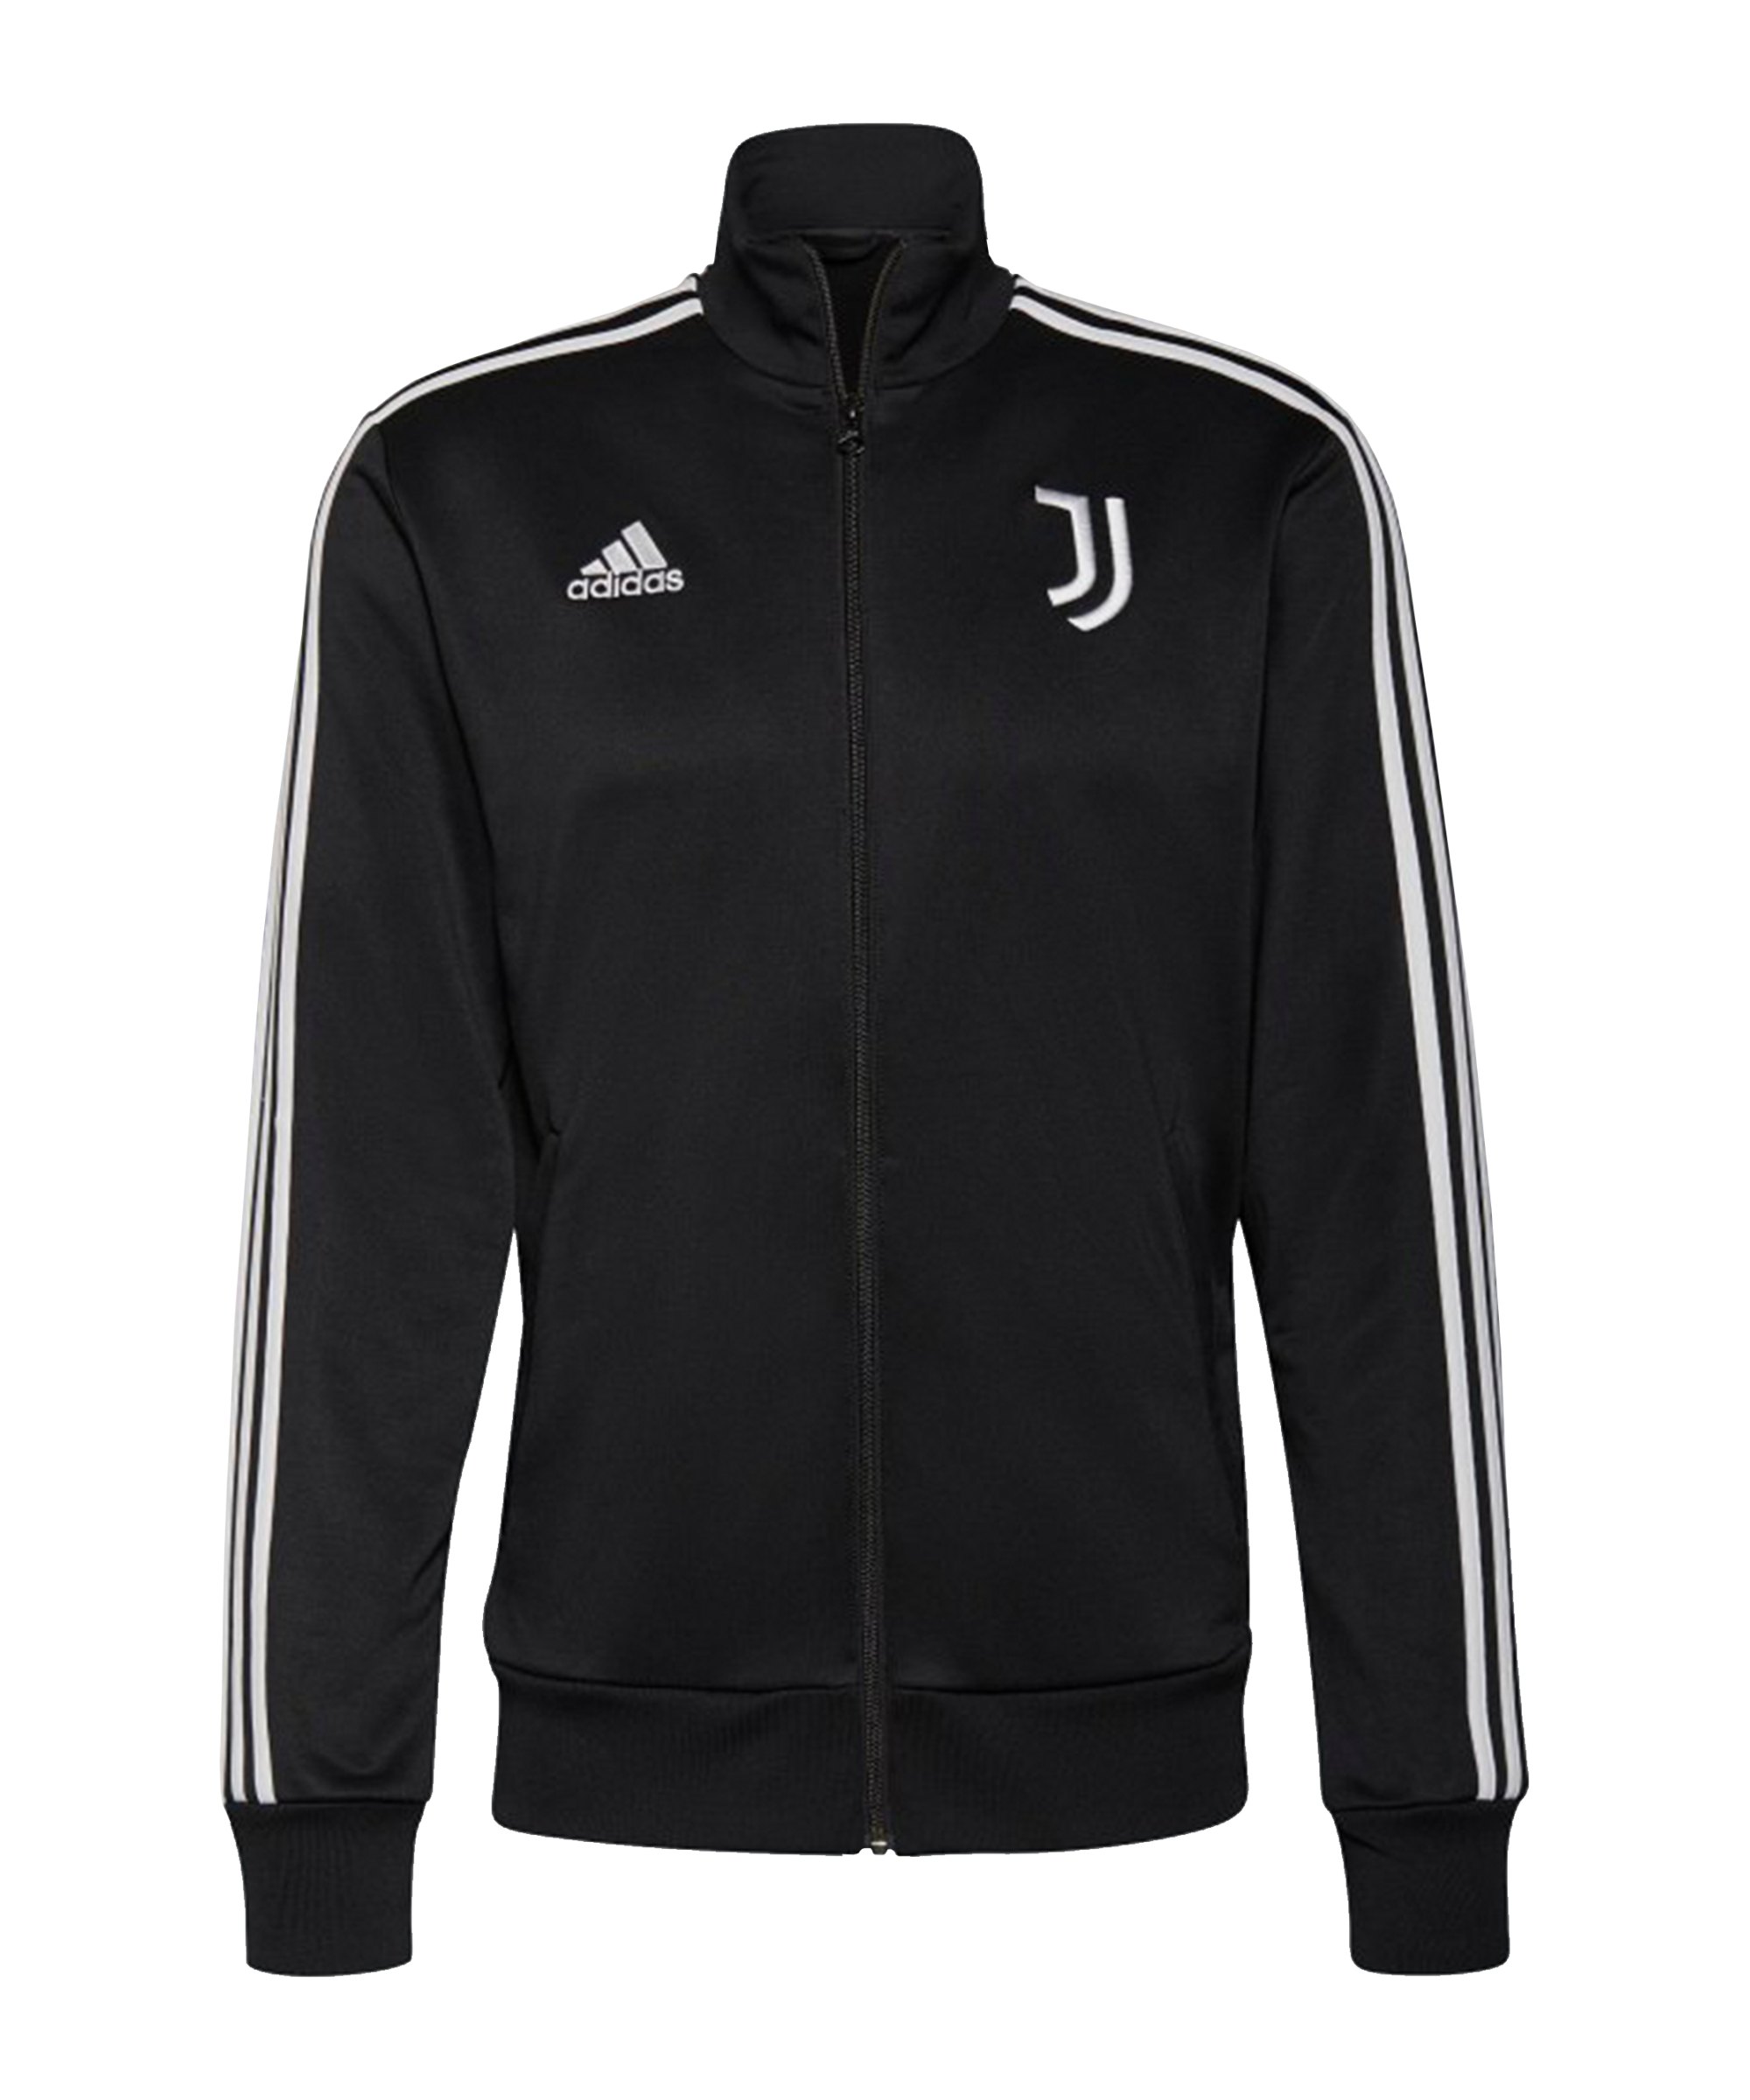 adidas Juventus Turin 3S Tracktop Jacke Schwarz - schwarz